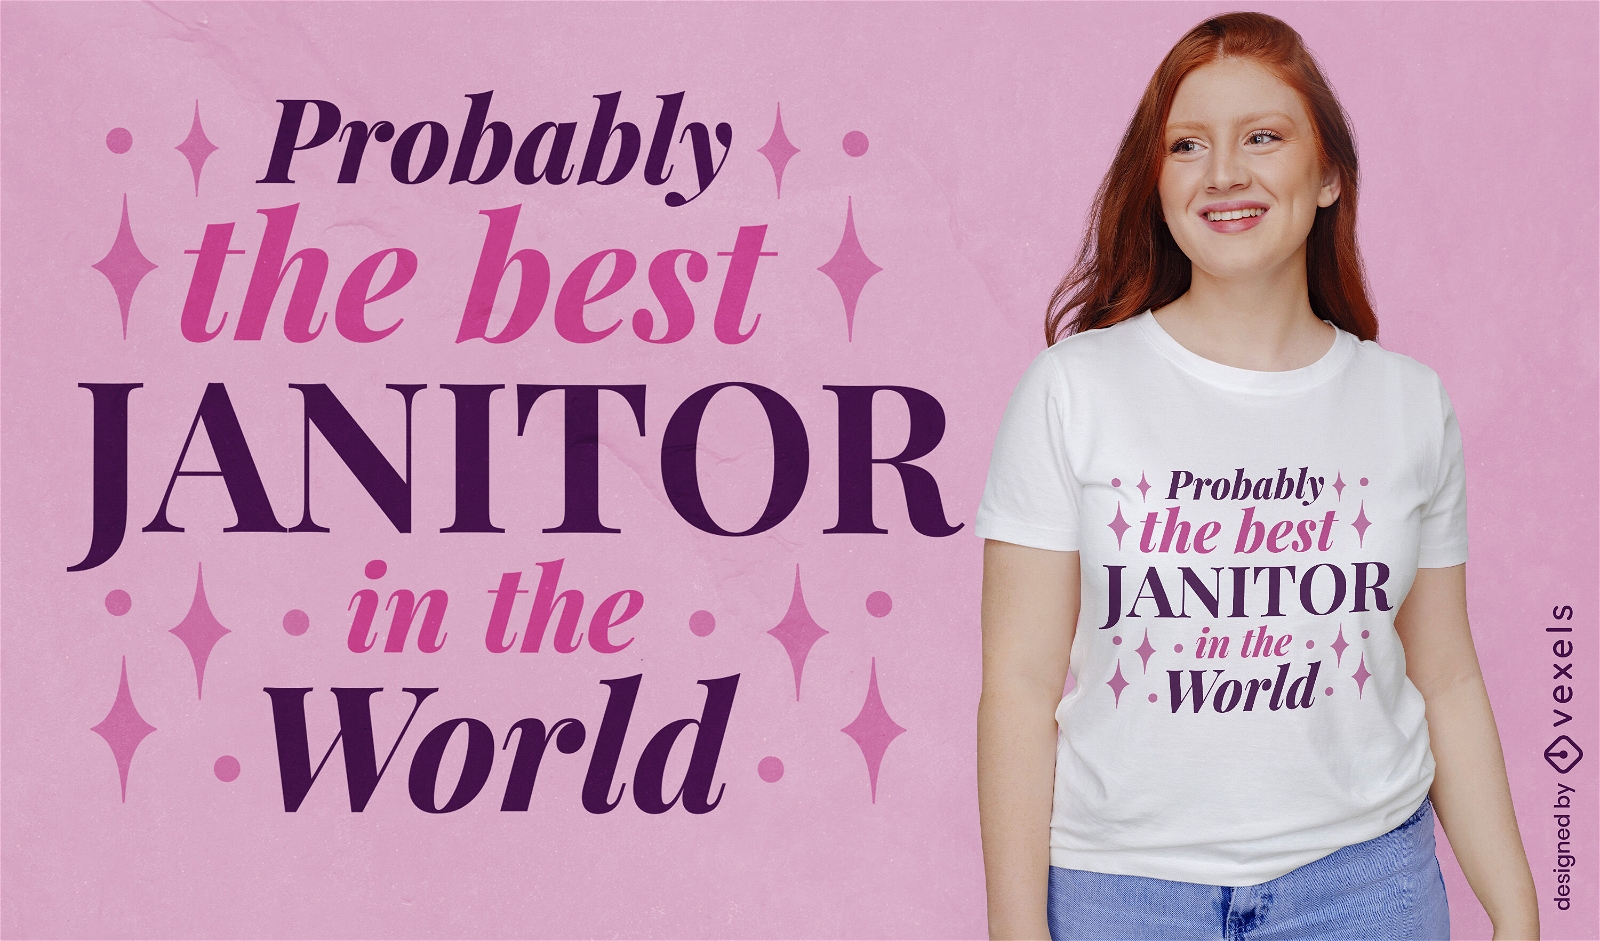 World's best janitor t-shirt design